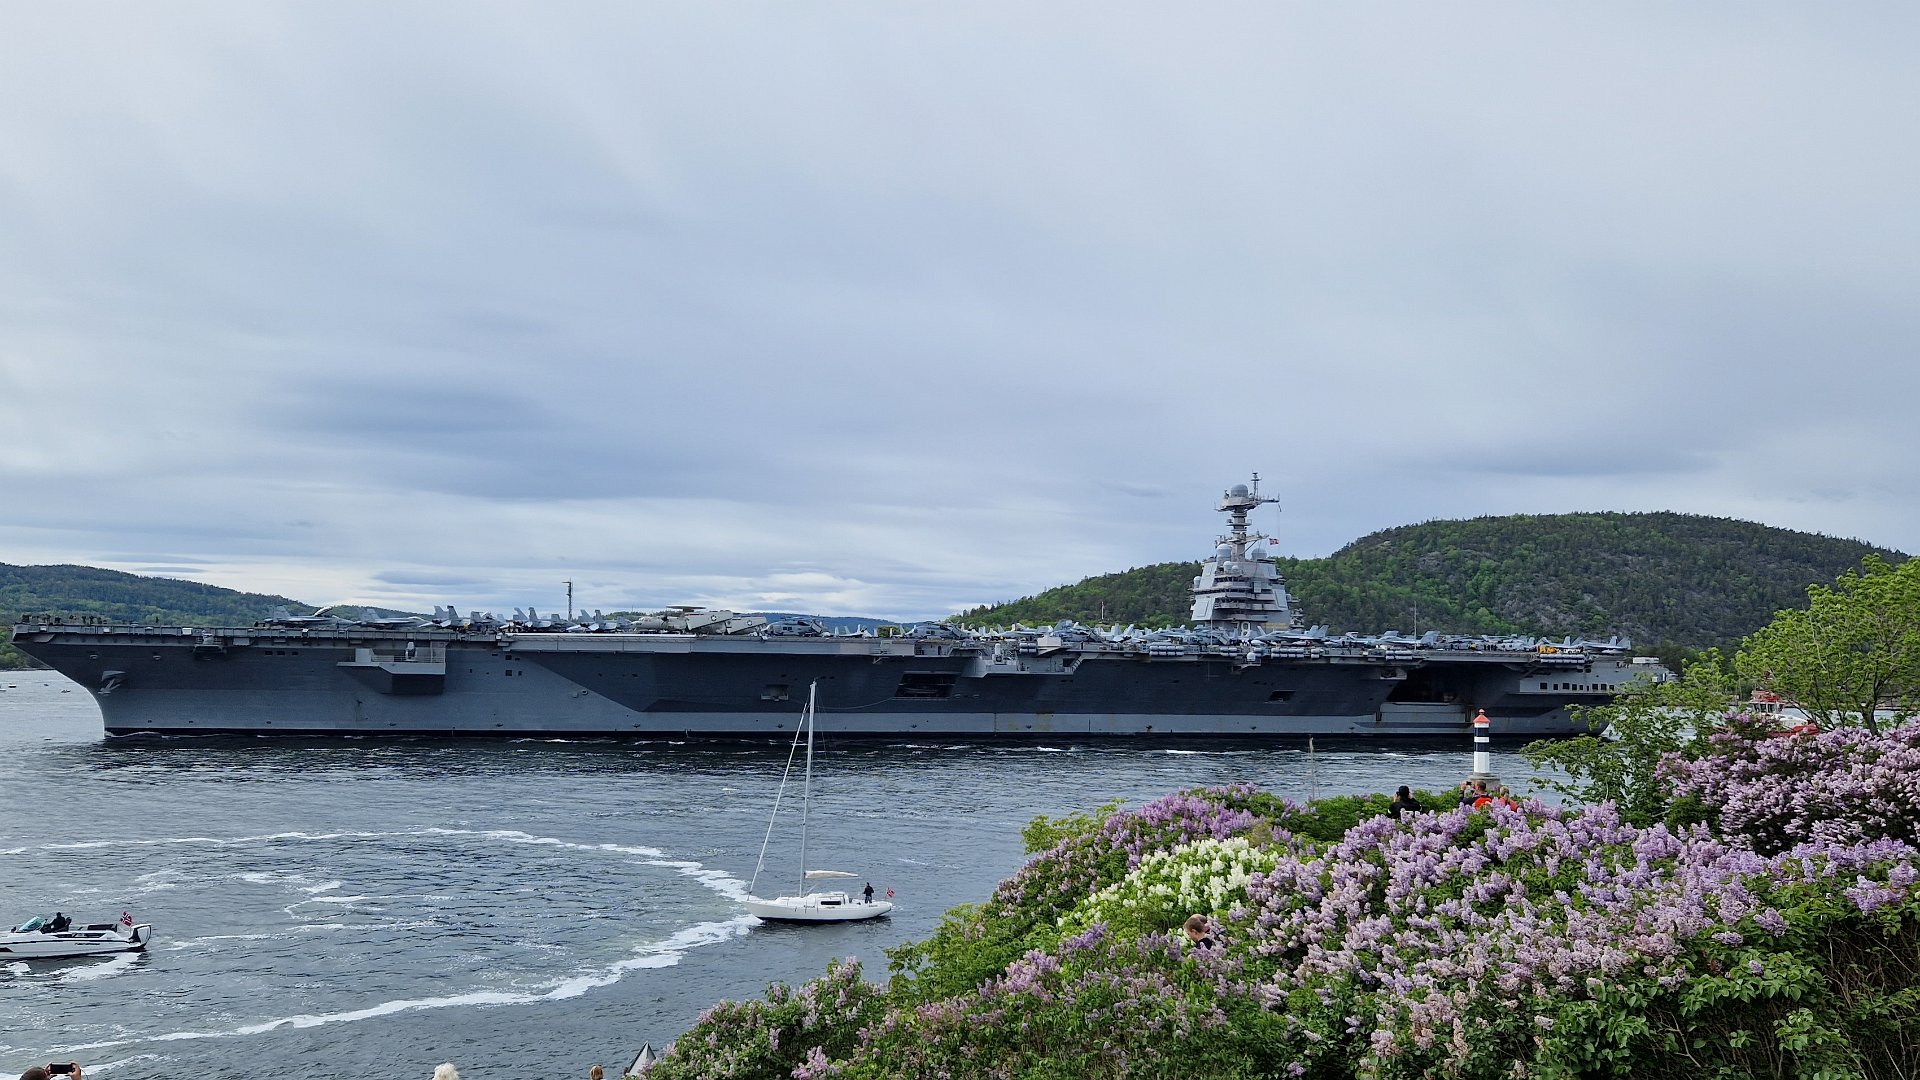 USS Gerald R. Ford in Oslo